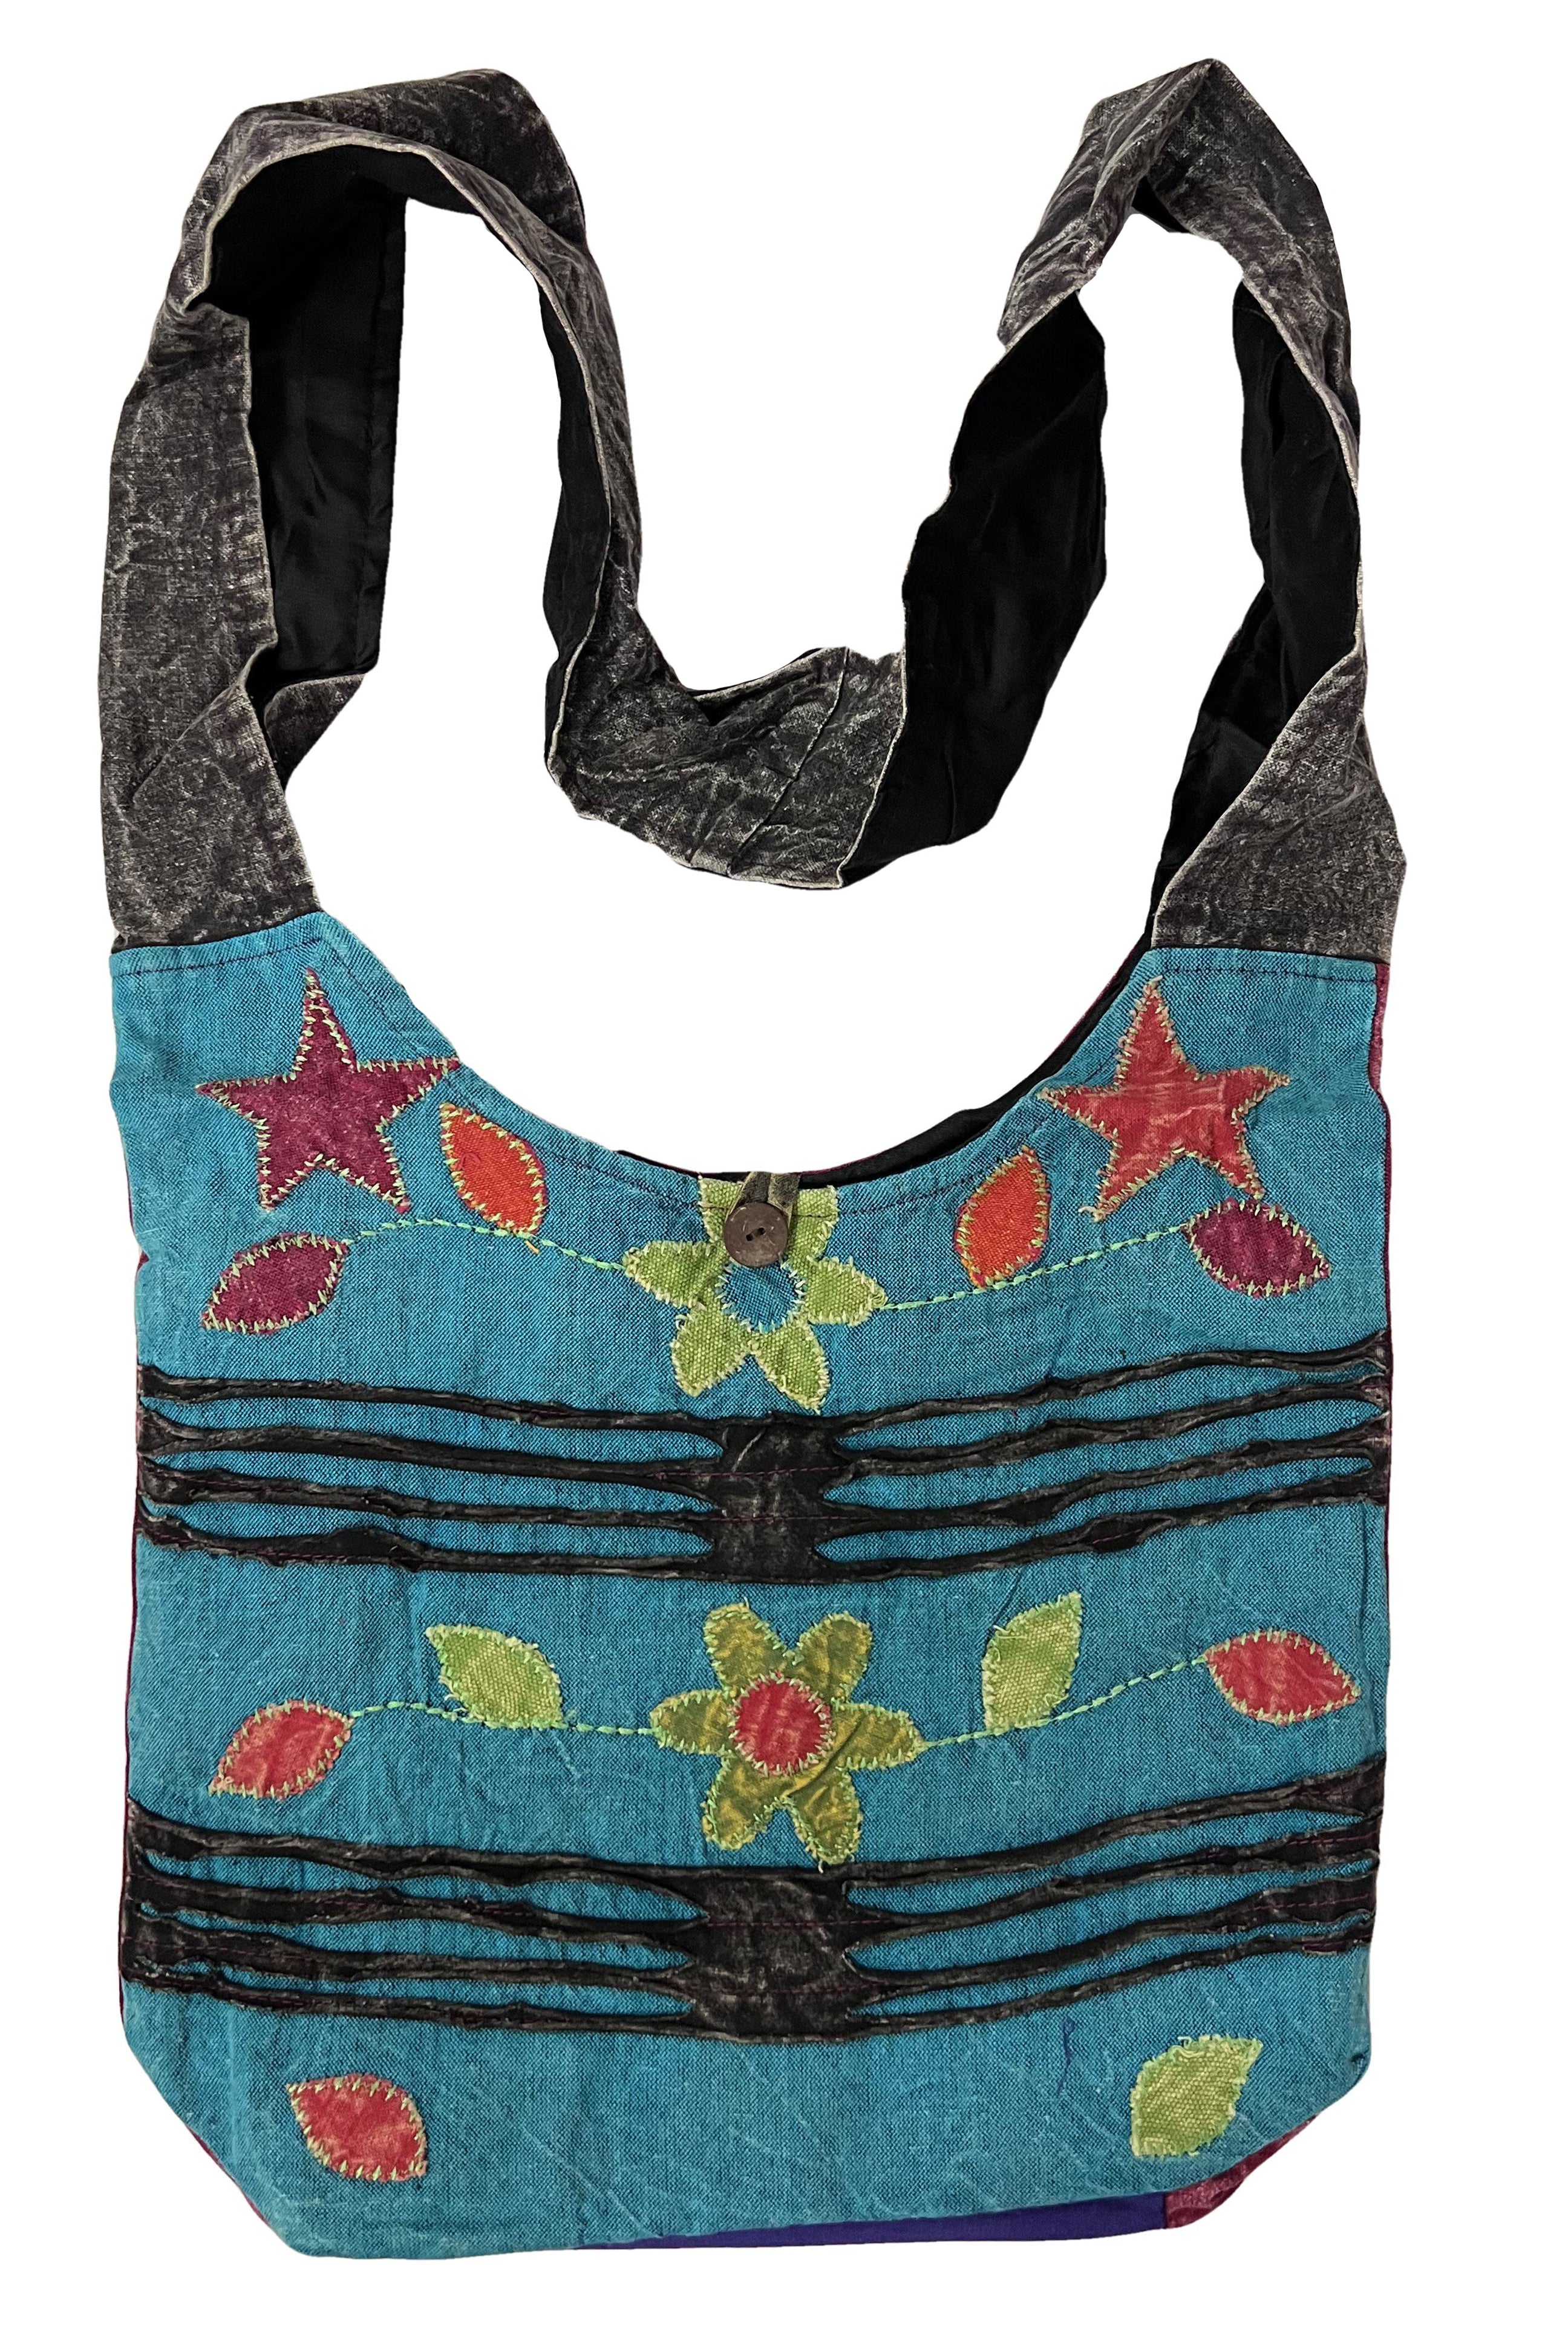 Unique and Colorful Boho Shoulder Bag Cotton Bohemian Bag 5-POCKET